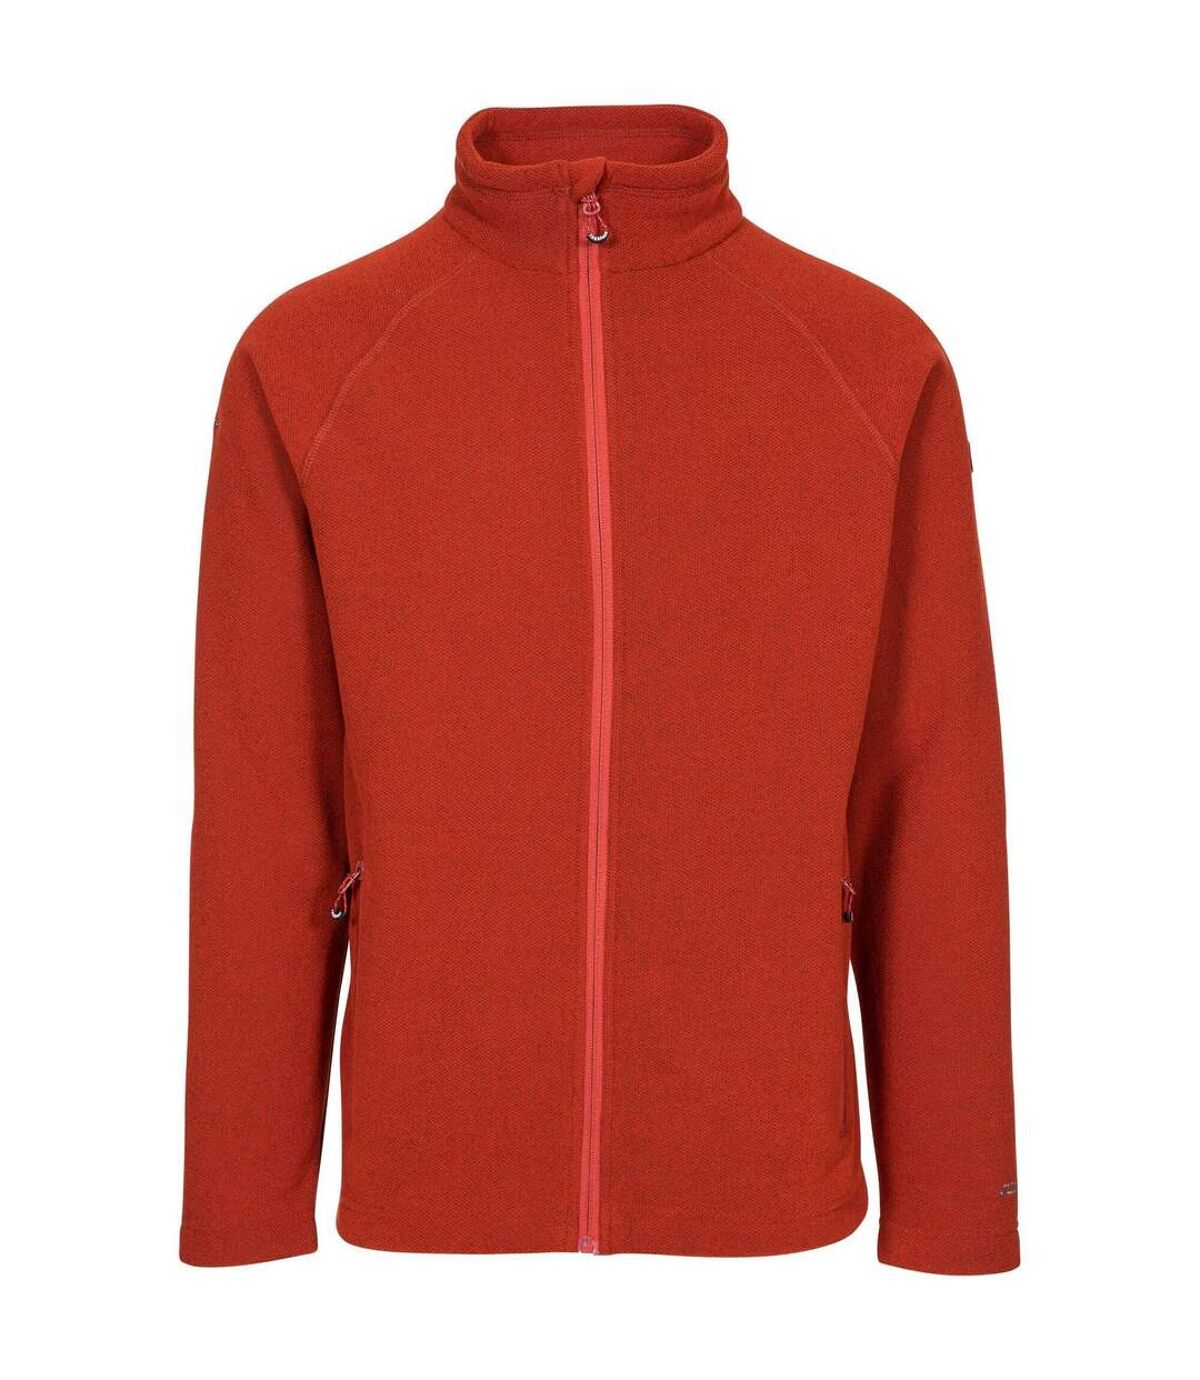 Trespass Mens Steadburn Fleece Jacket (Spice Red) - UTTP5406